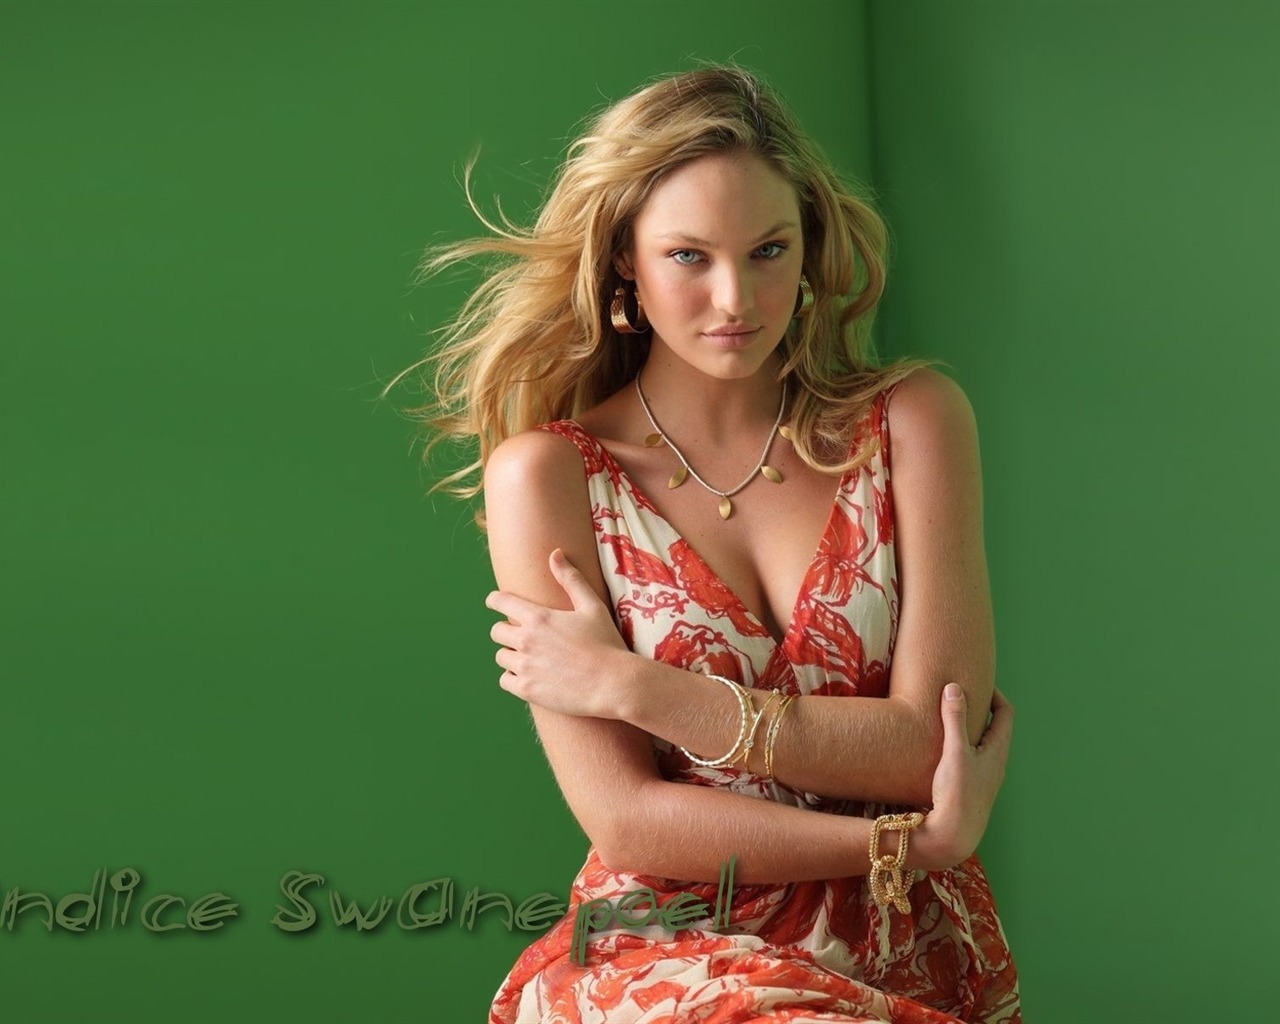 Candice Swanepoel 康迪斯·斯瓦内普尔 美女壁纸16 - 1280x1024